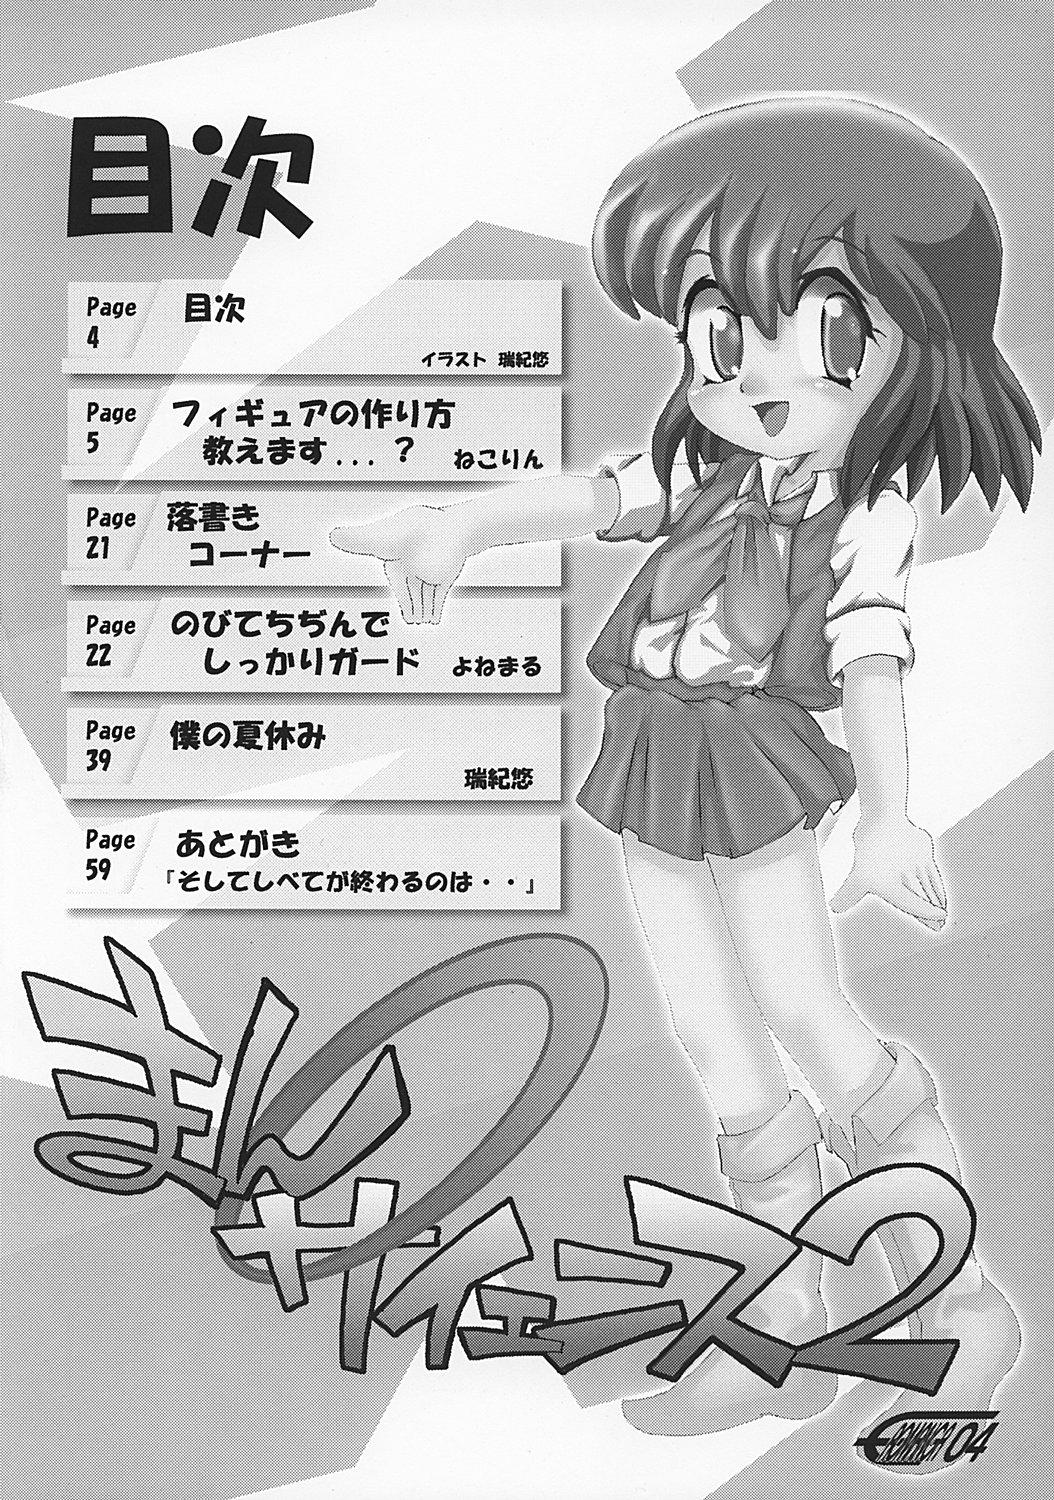 Stepdaughter Manga Science 2 - Onnanoko no Himitsu Big Boobs - Picture 3